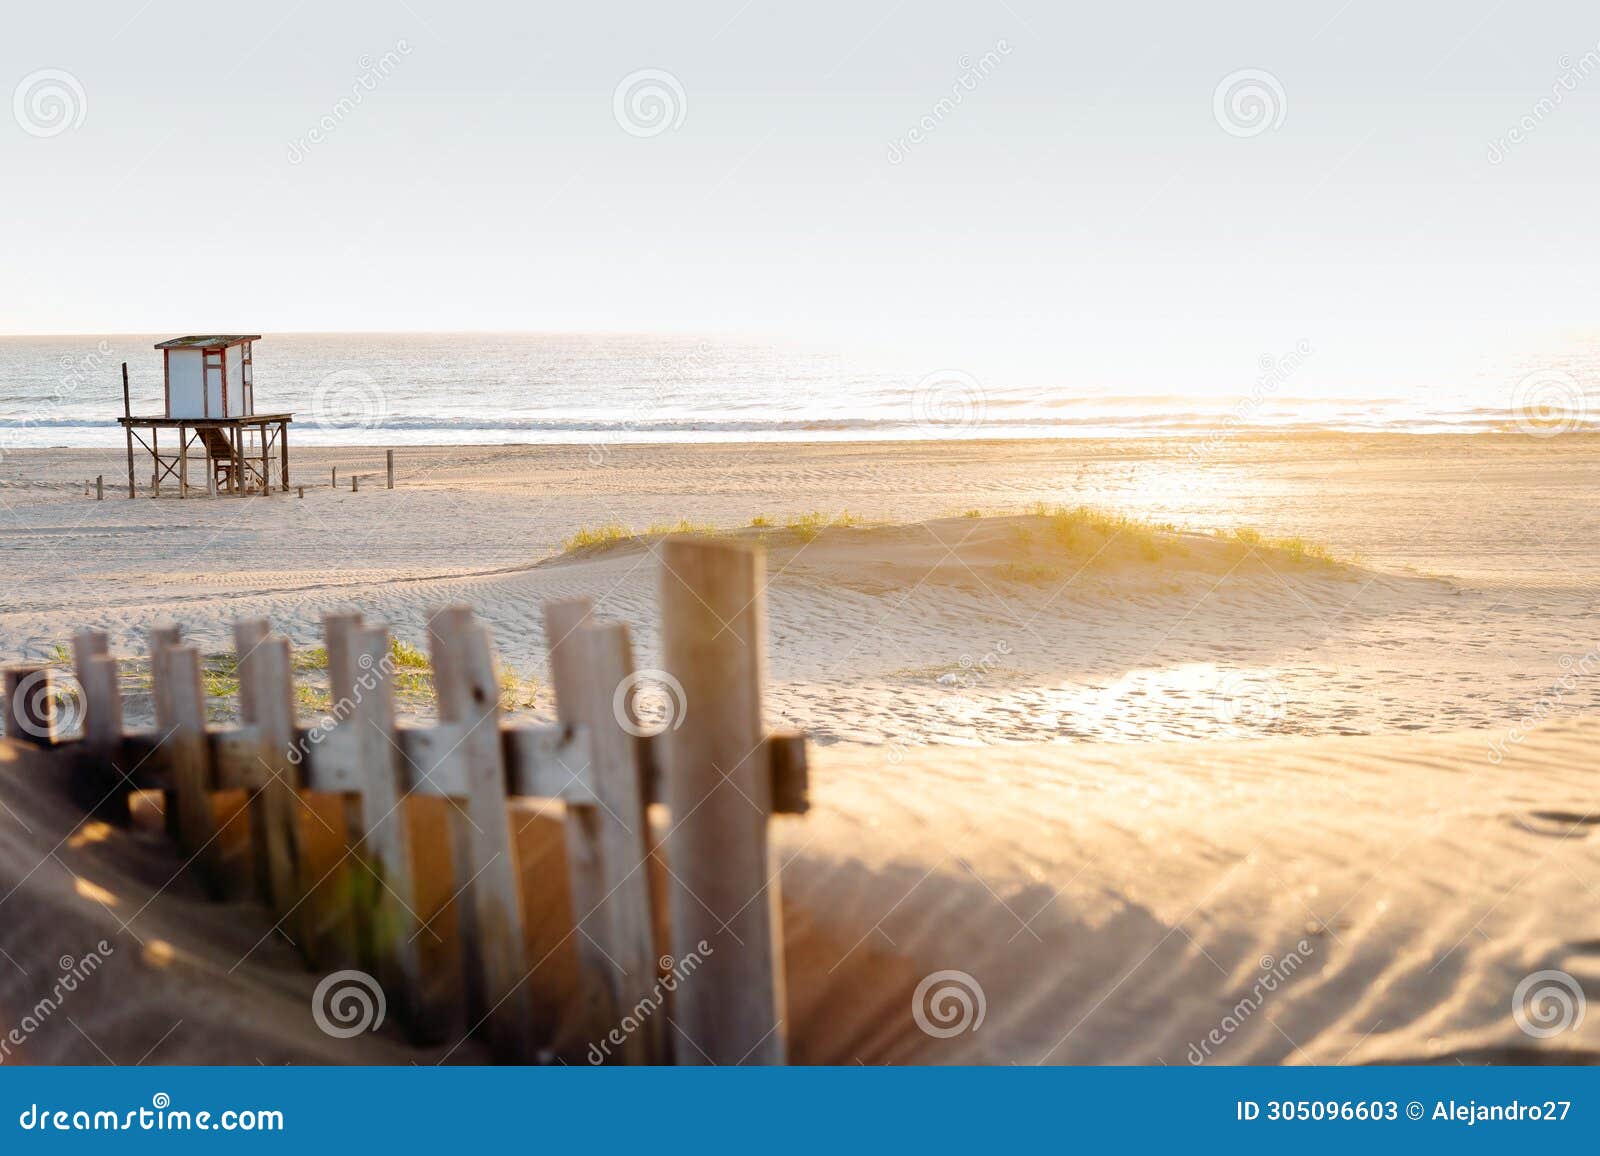 beautiful morning of summer in the beach. mar azul, argentina